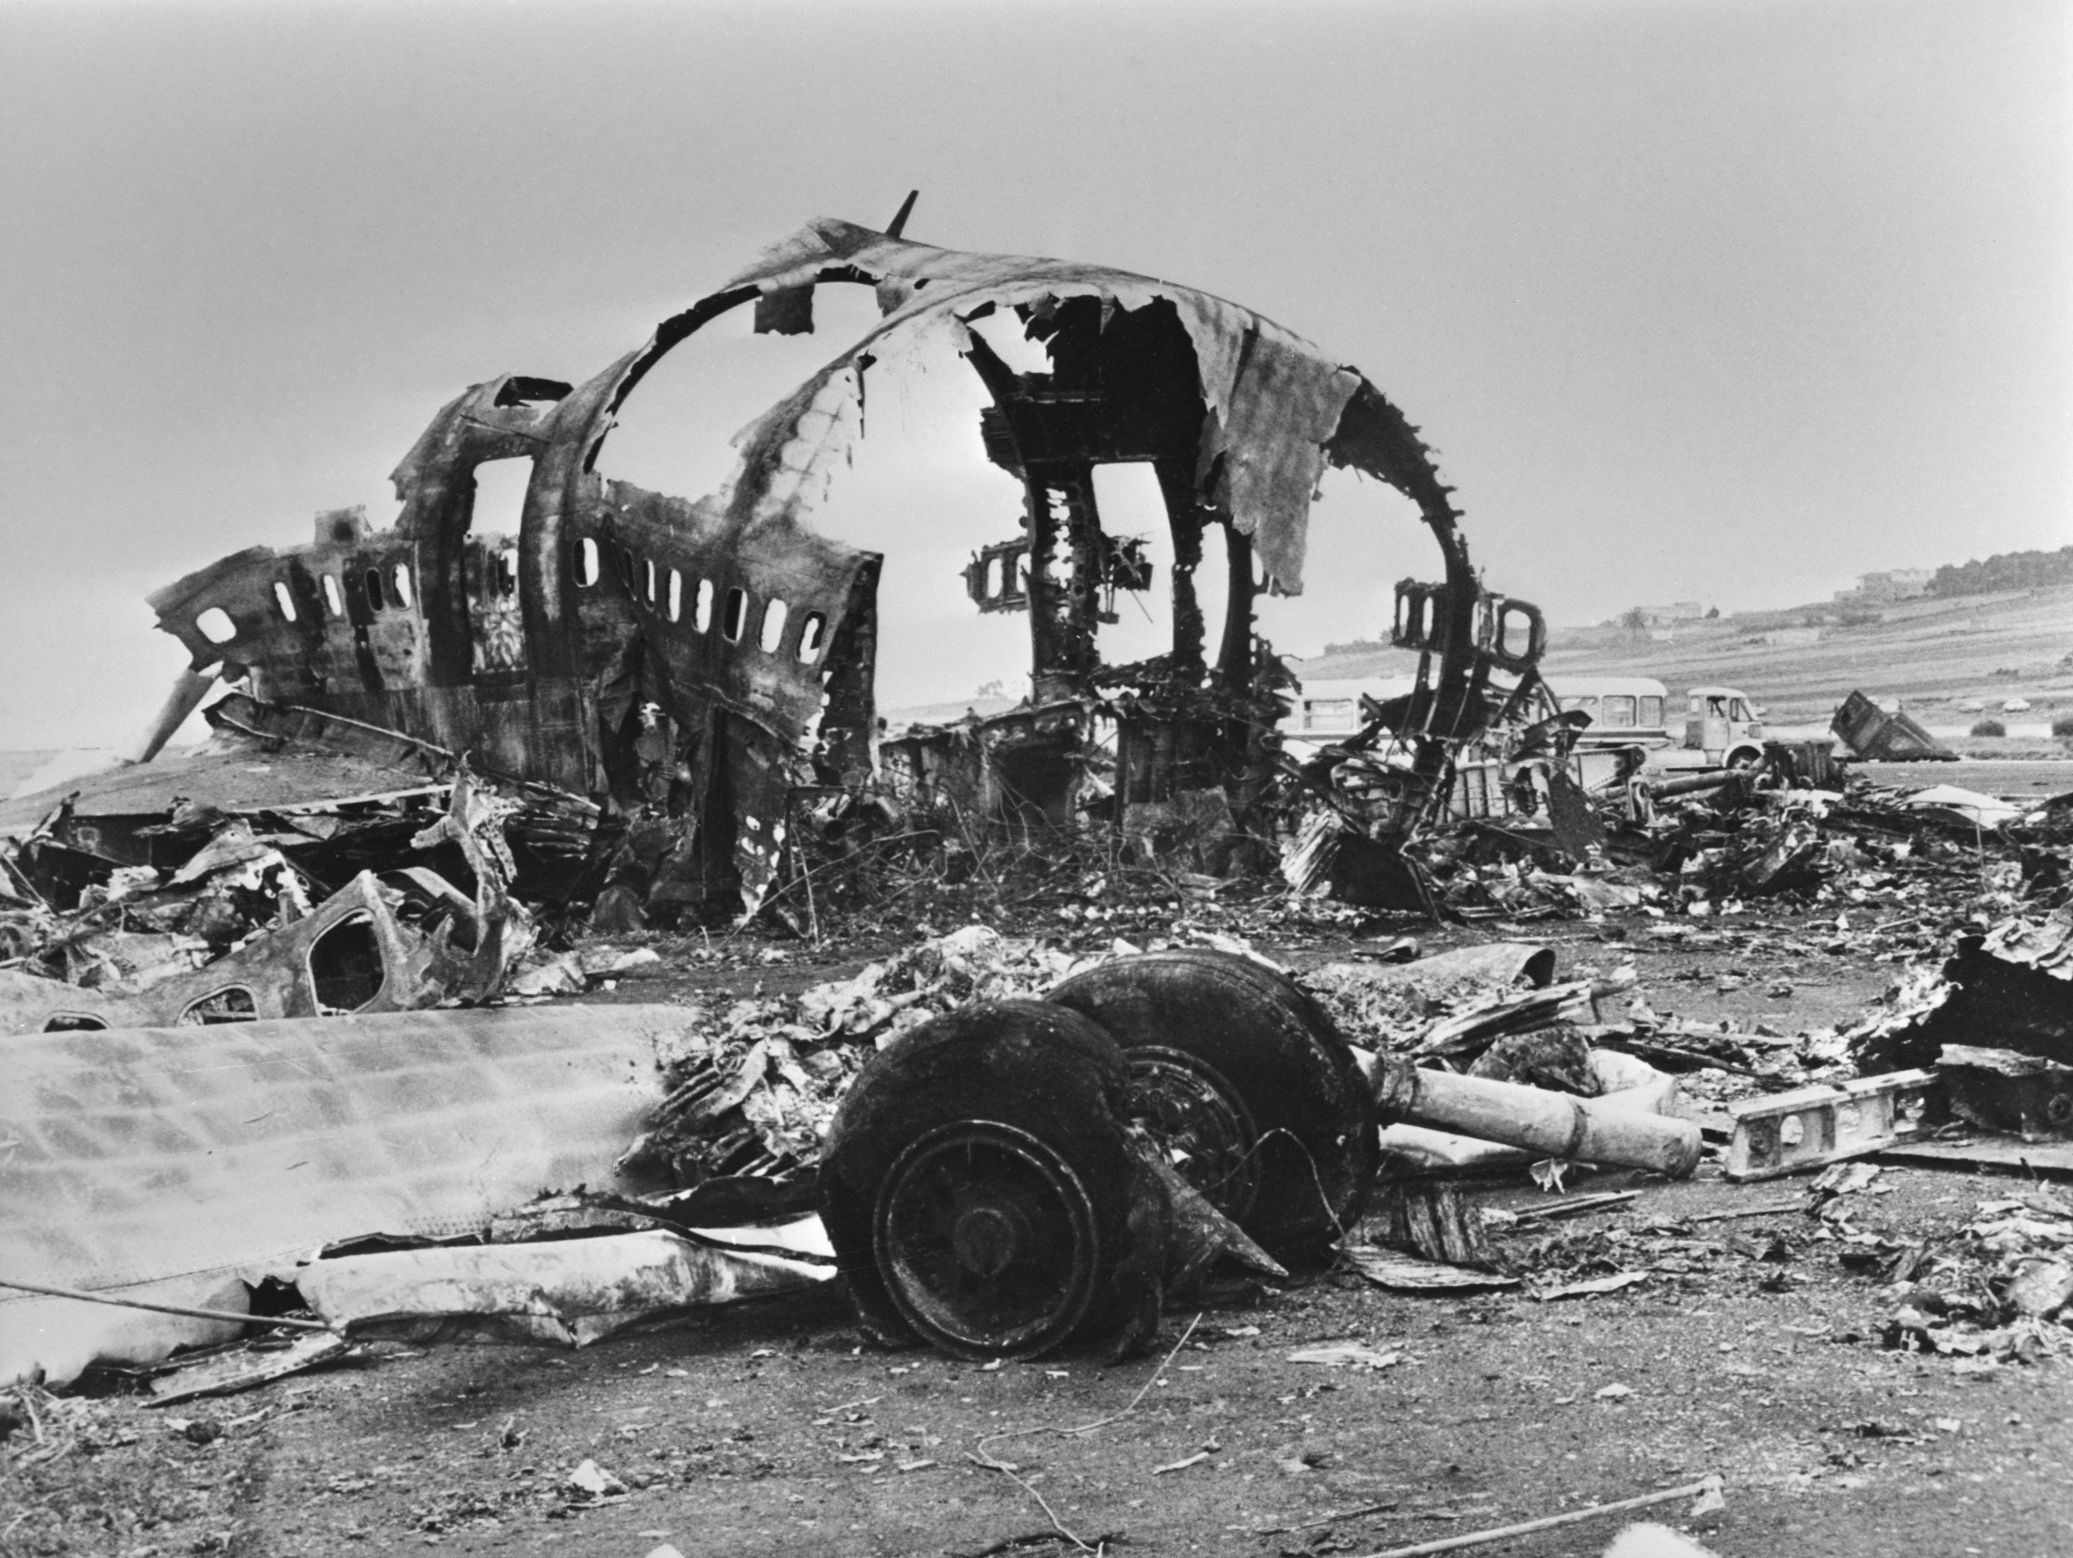 Wreckage of KLM 747 Tenerife disaster